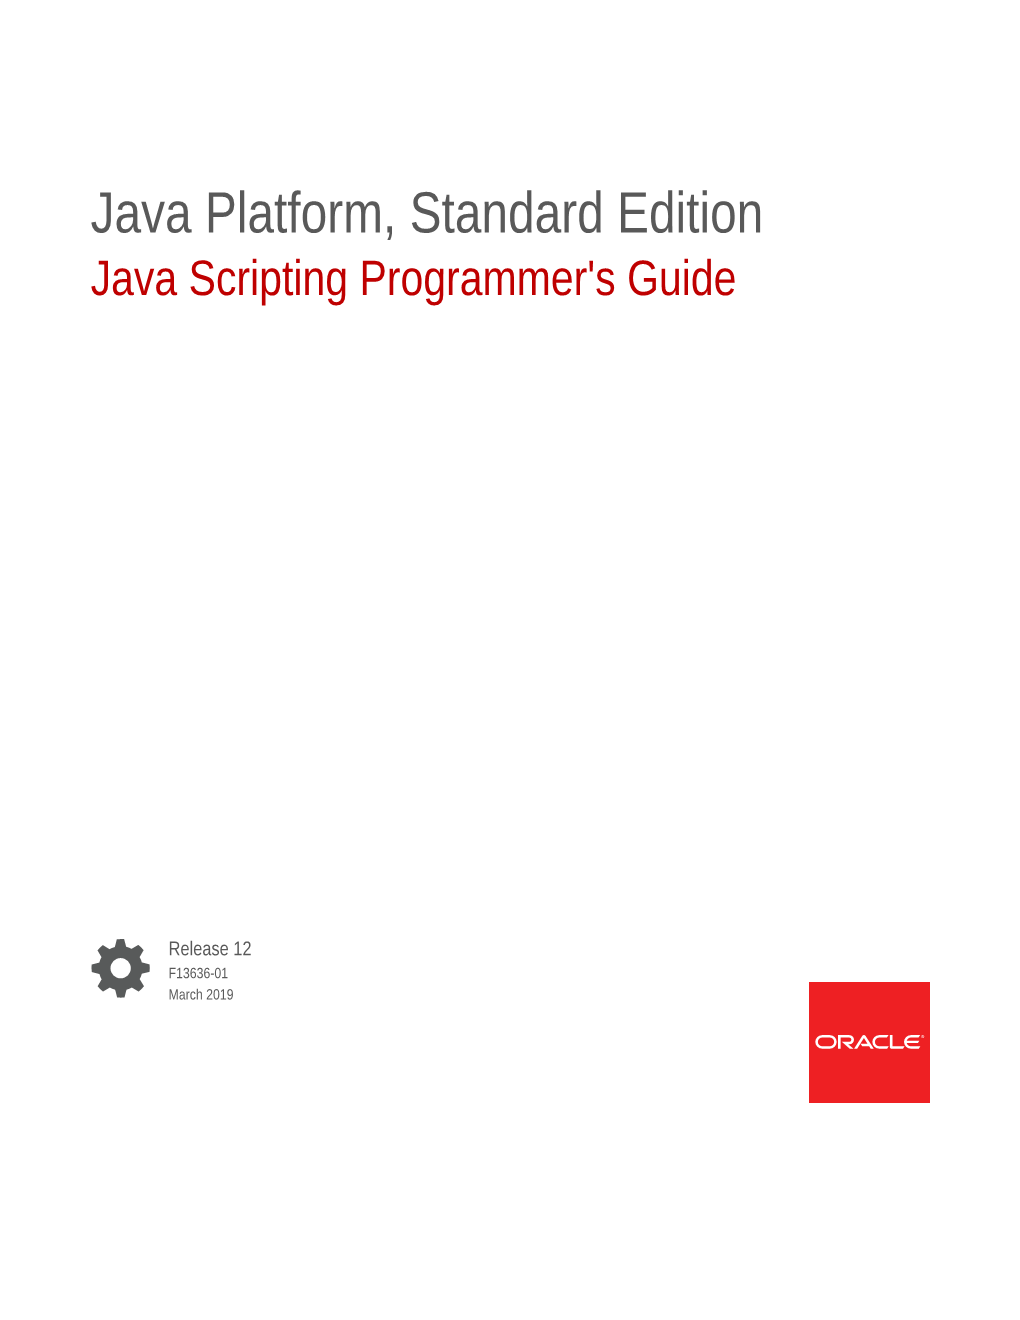 Java Scripting Programmer's Guide